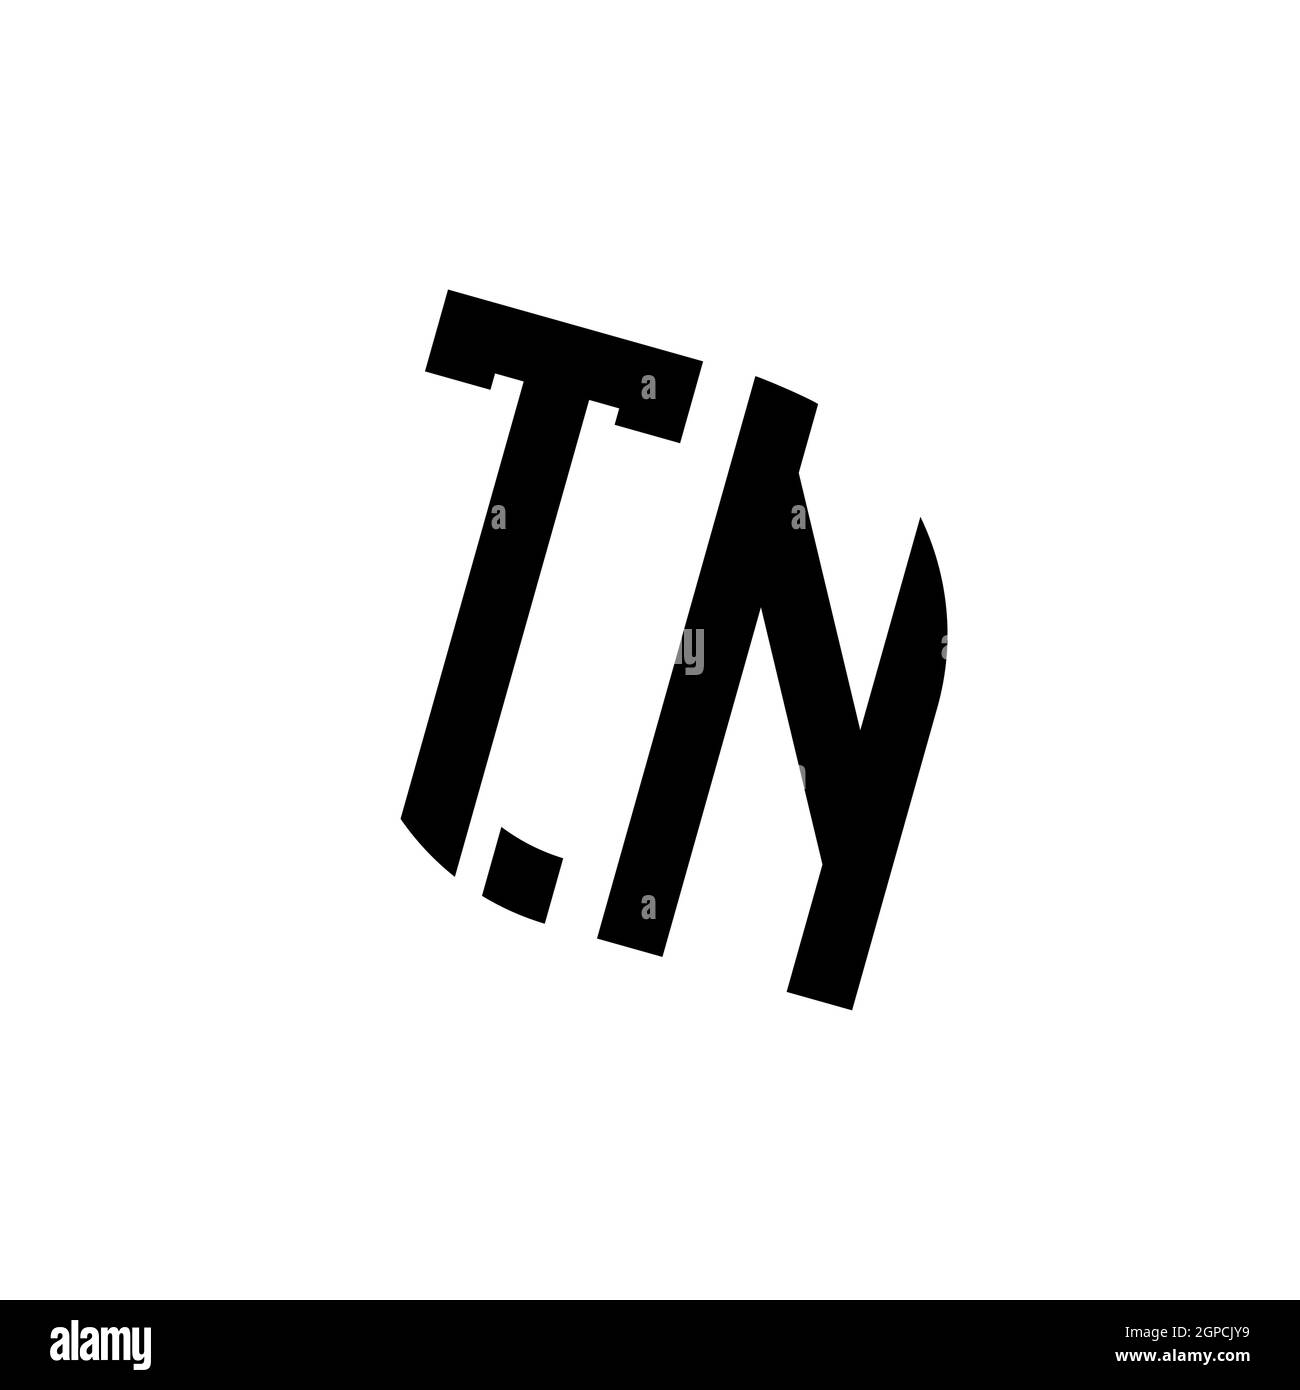 100,000 Tn logo Vector Images